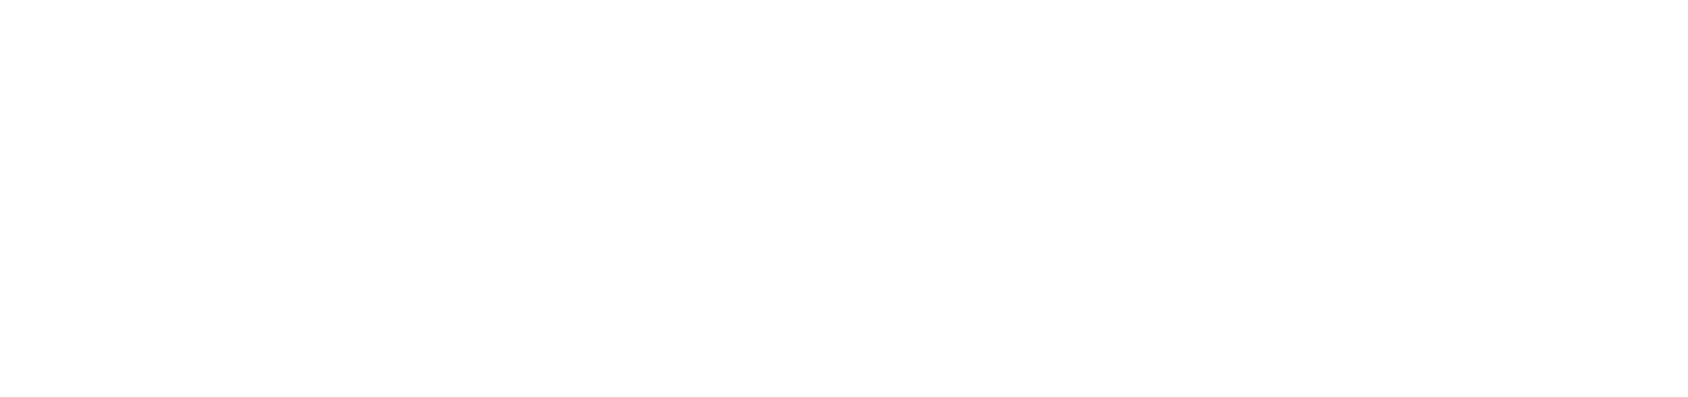 autodesk-platform-services-certified-partner-logo-rgb-white